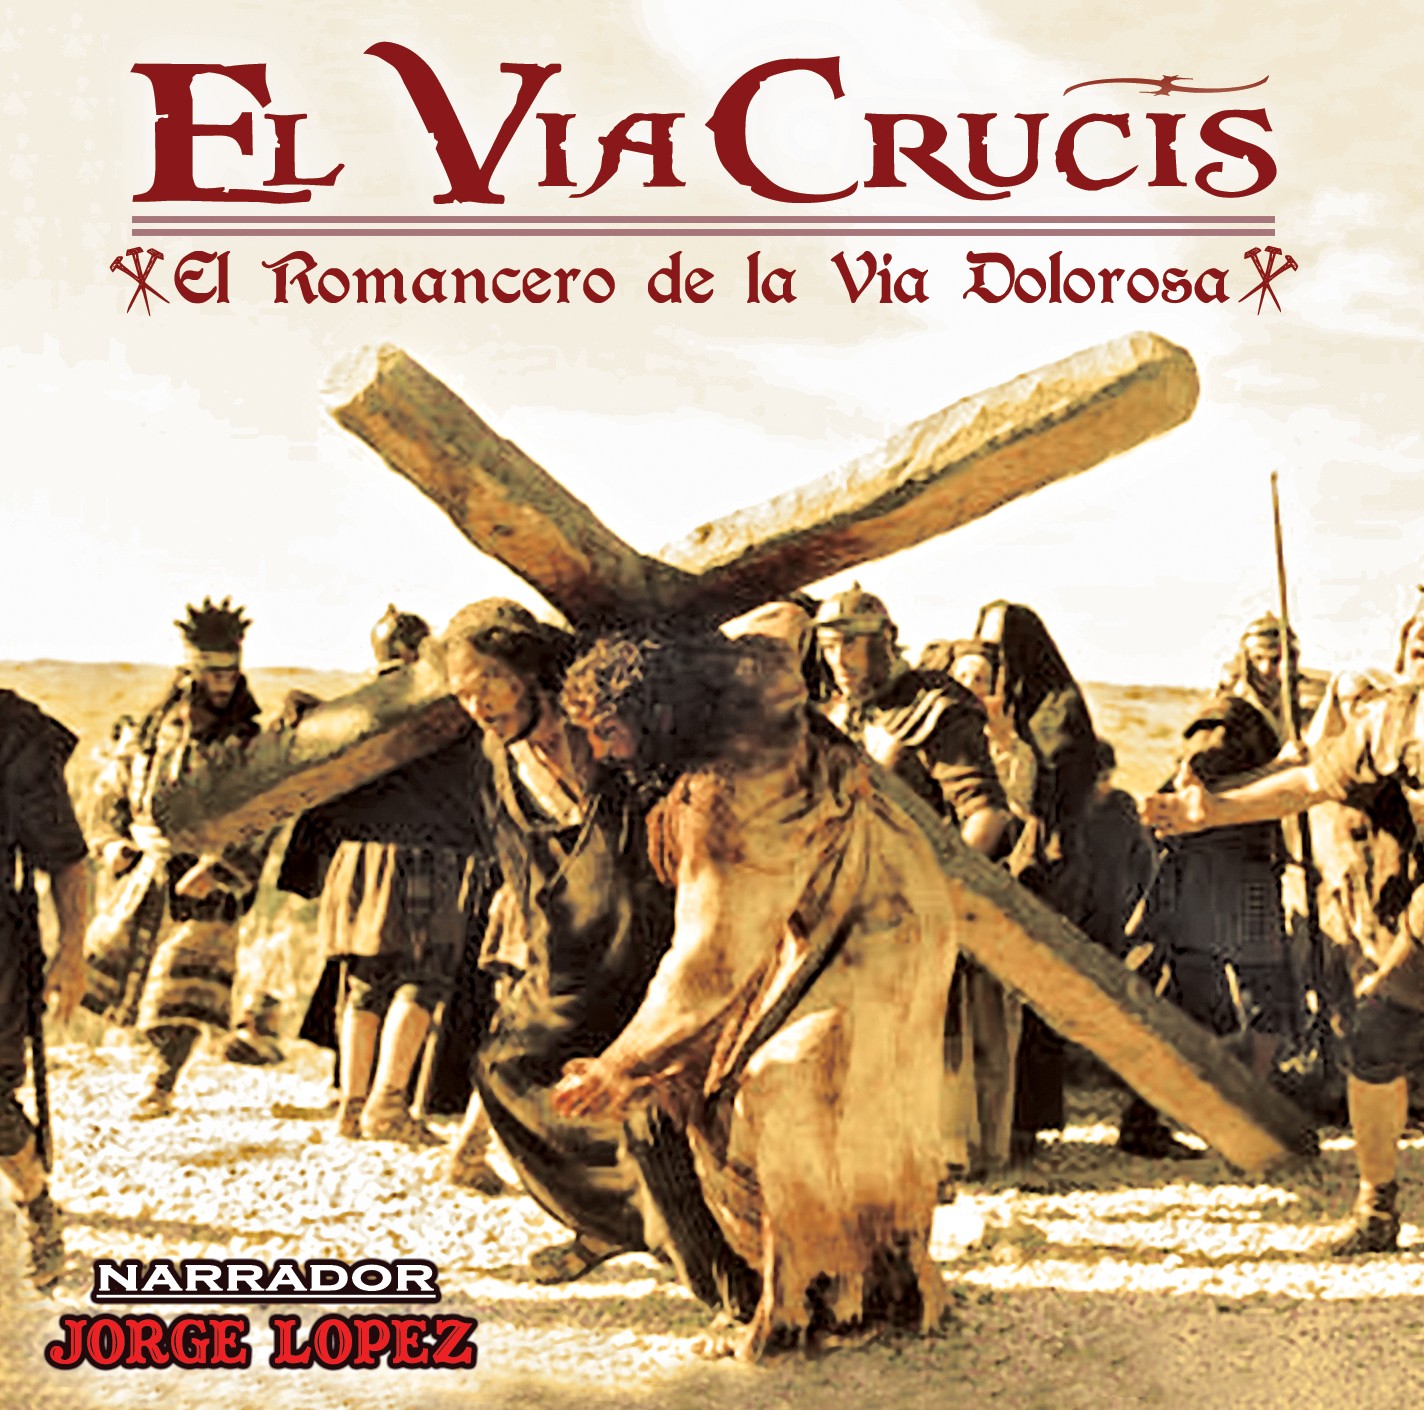 El Via Crucis ” El Romancero De La Via Dolorosa” Ajr Discos 